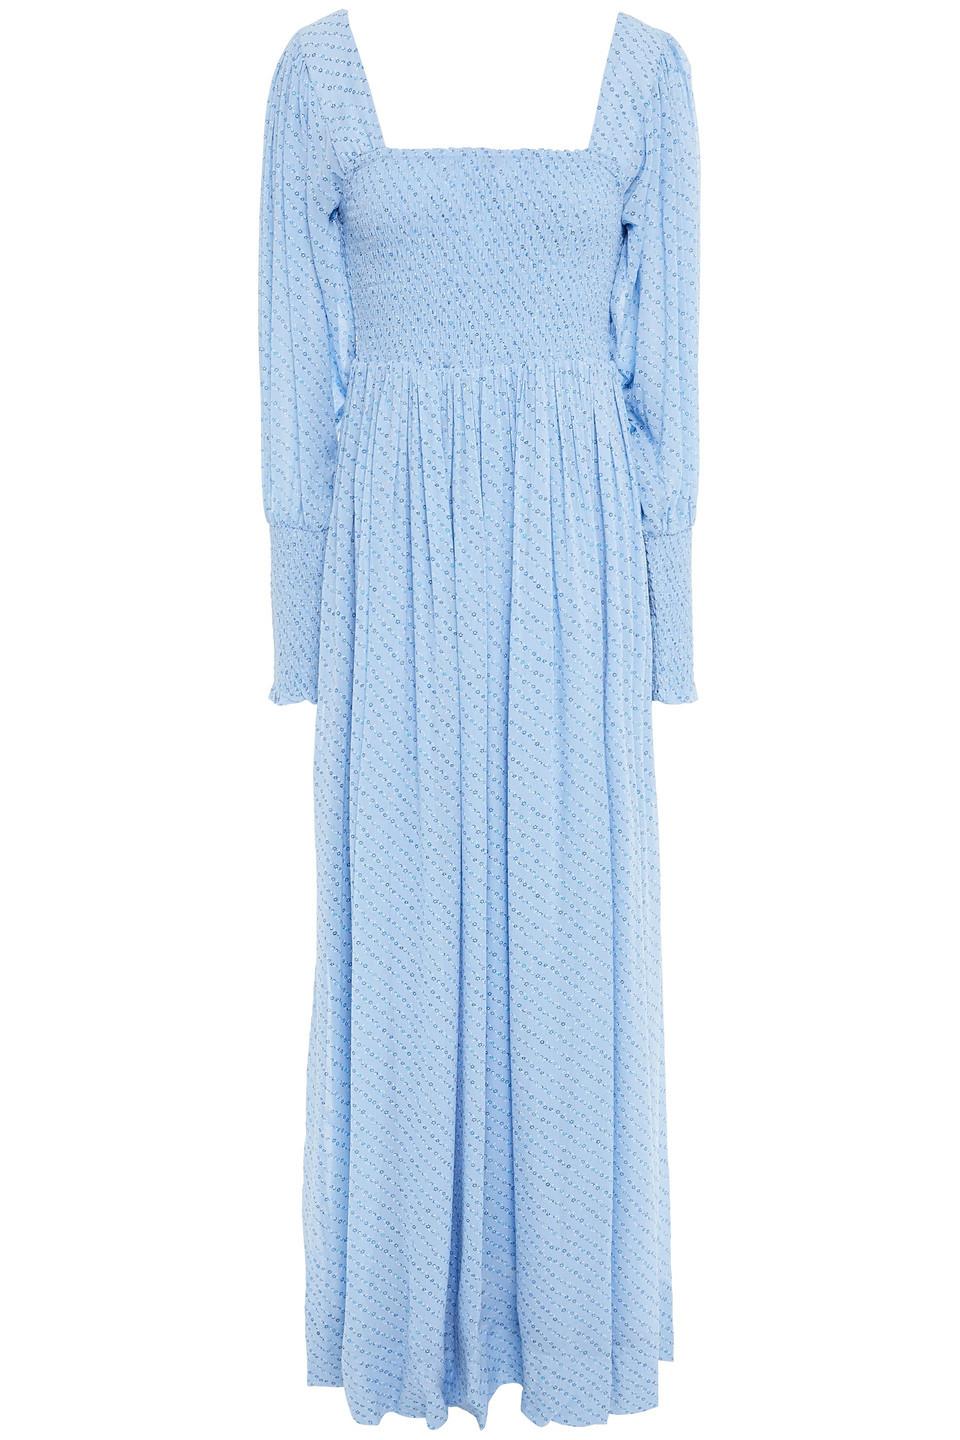 Ganni Shirred Floral-print Georgette Maxi Dress in Blue | Lyst Canada